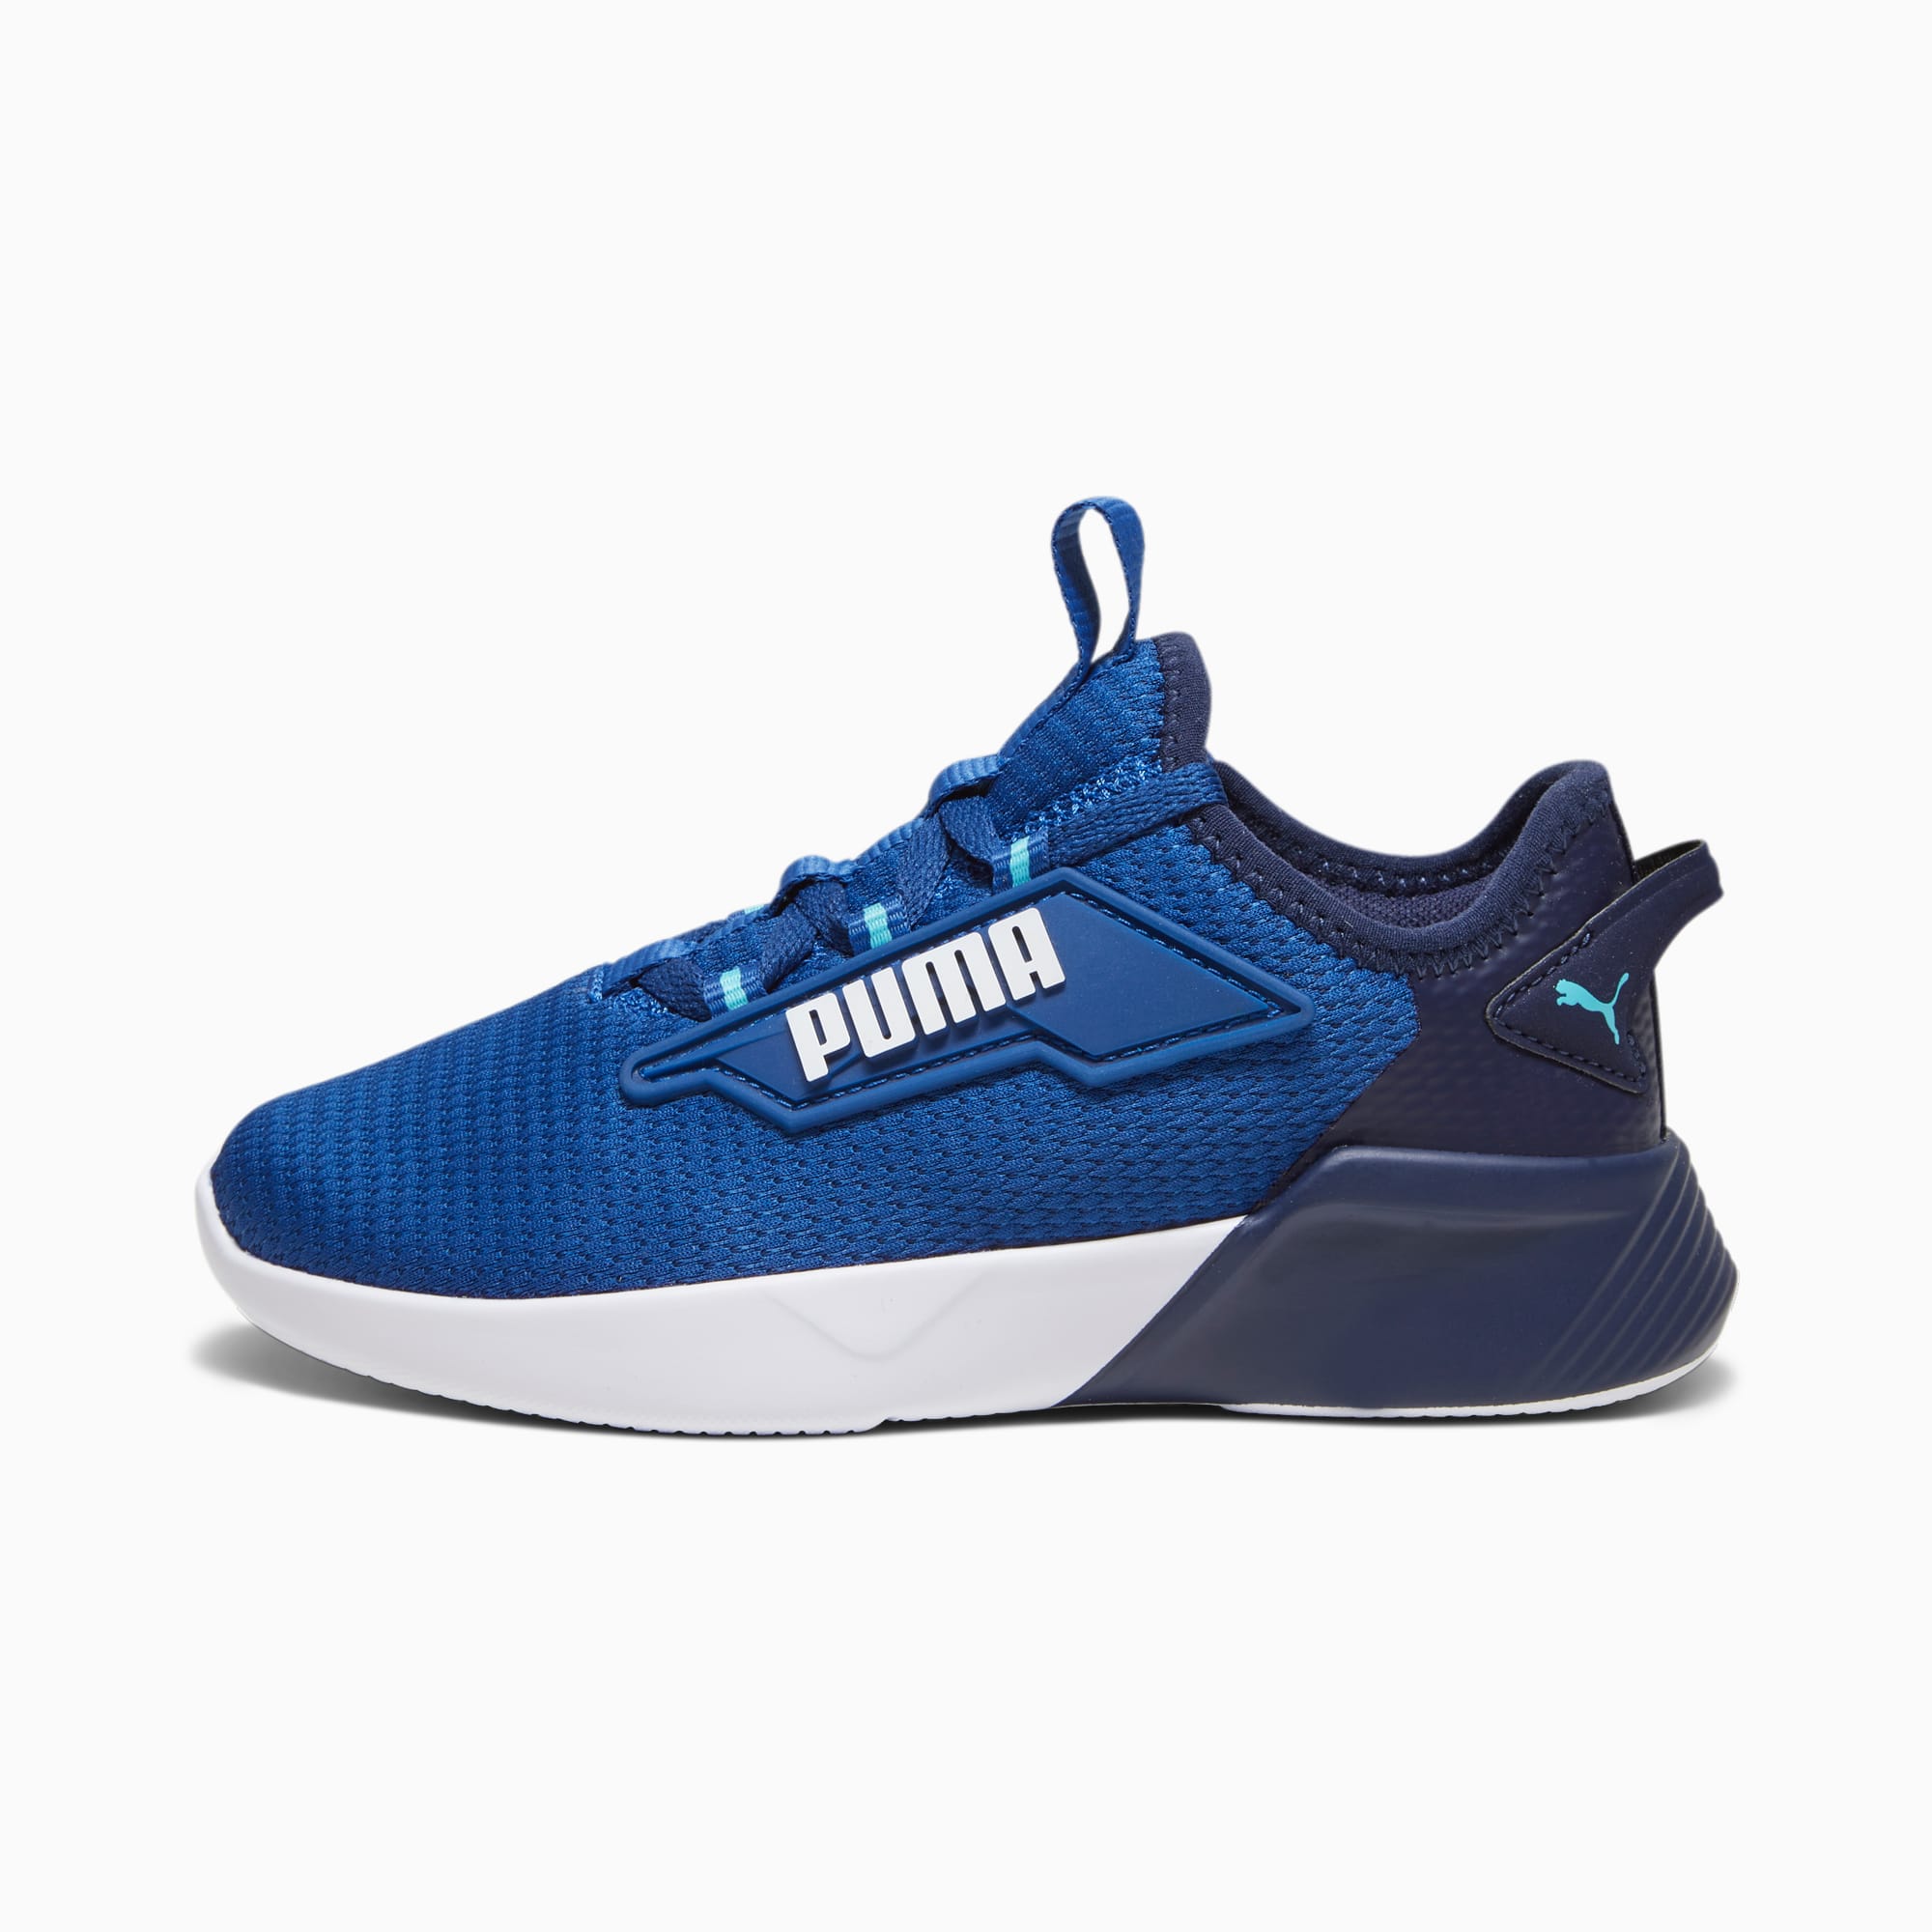 PUMA Retaliate 2 Sneakers für Kinder Schuhe, Blau/Weiß, Größe: 27.5, Schuhe